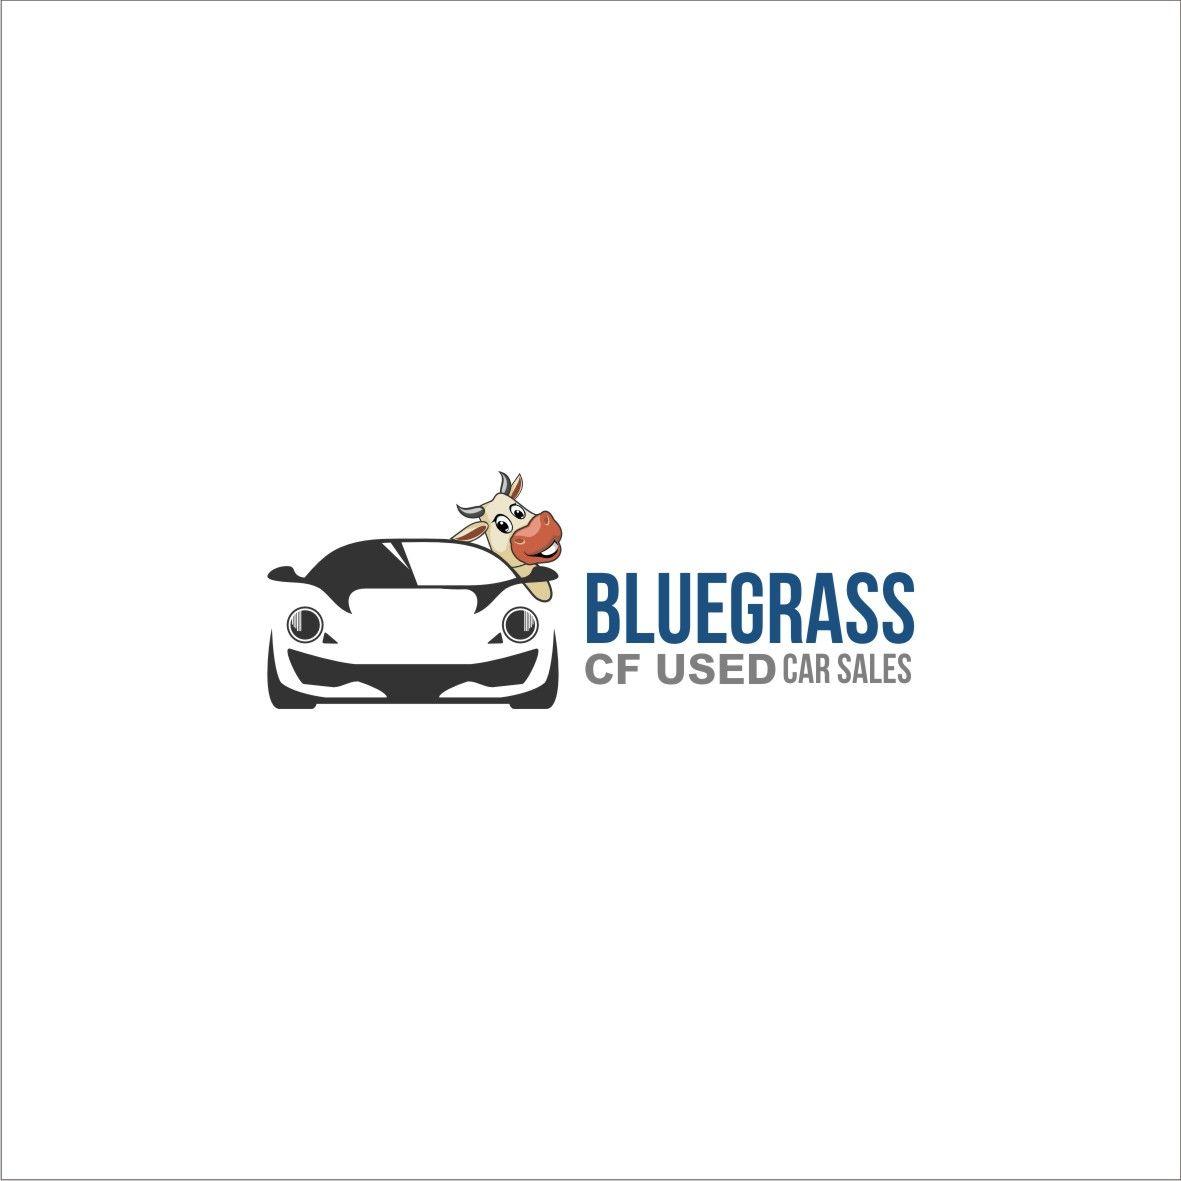 Cartoon Auto Sales Logo - Professional, Serious, Car Dealer Logo Design for Bluegrass CF USED ...